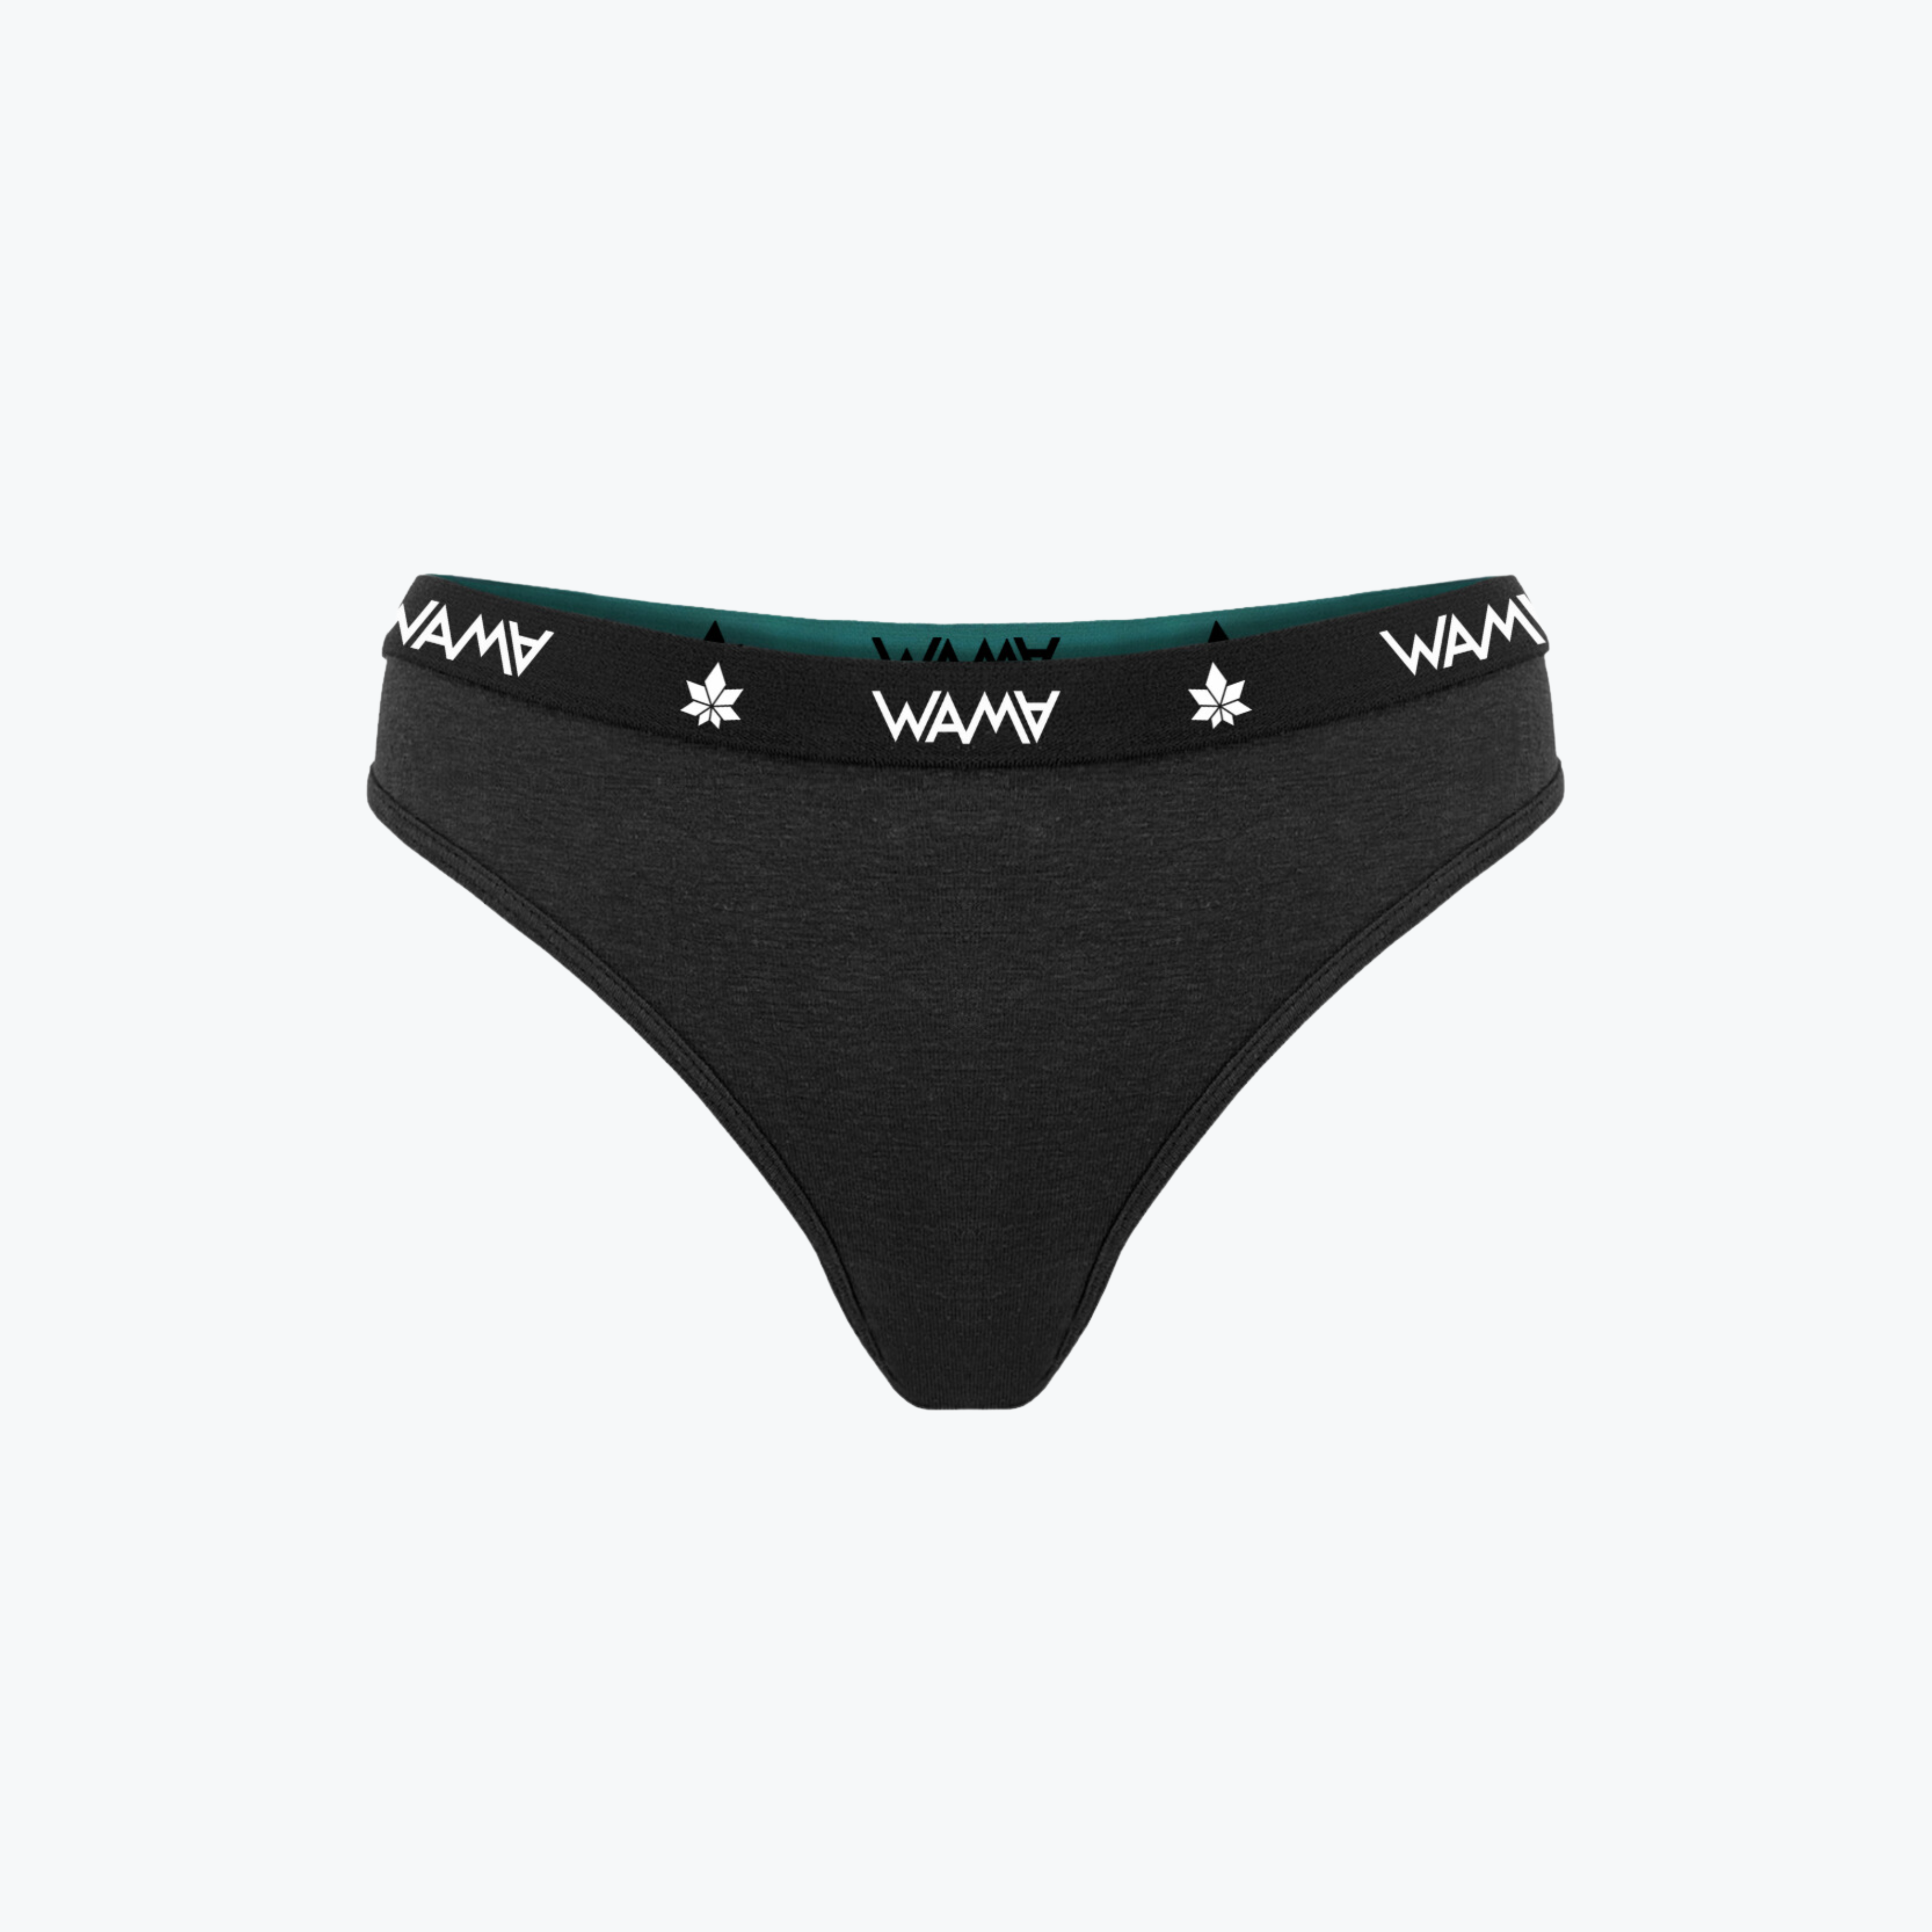 How Many Pairs Of Underwear Should I Have? – WAMA Underwear